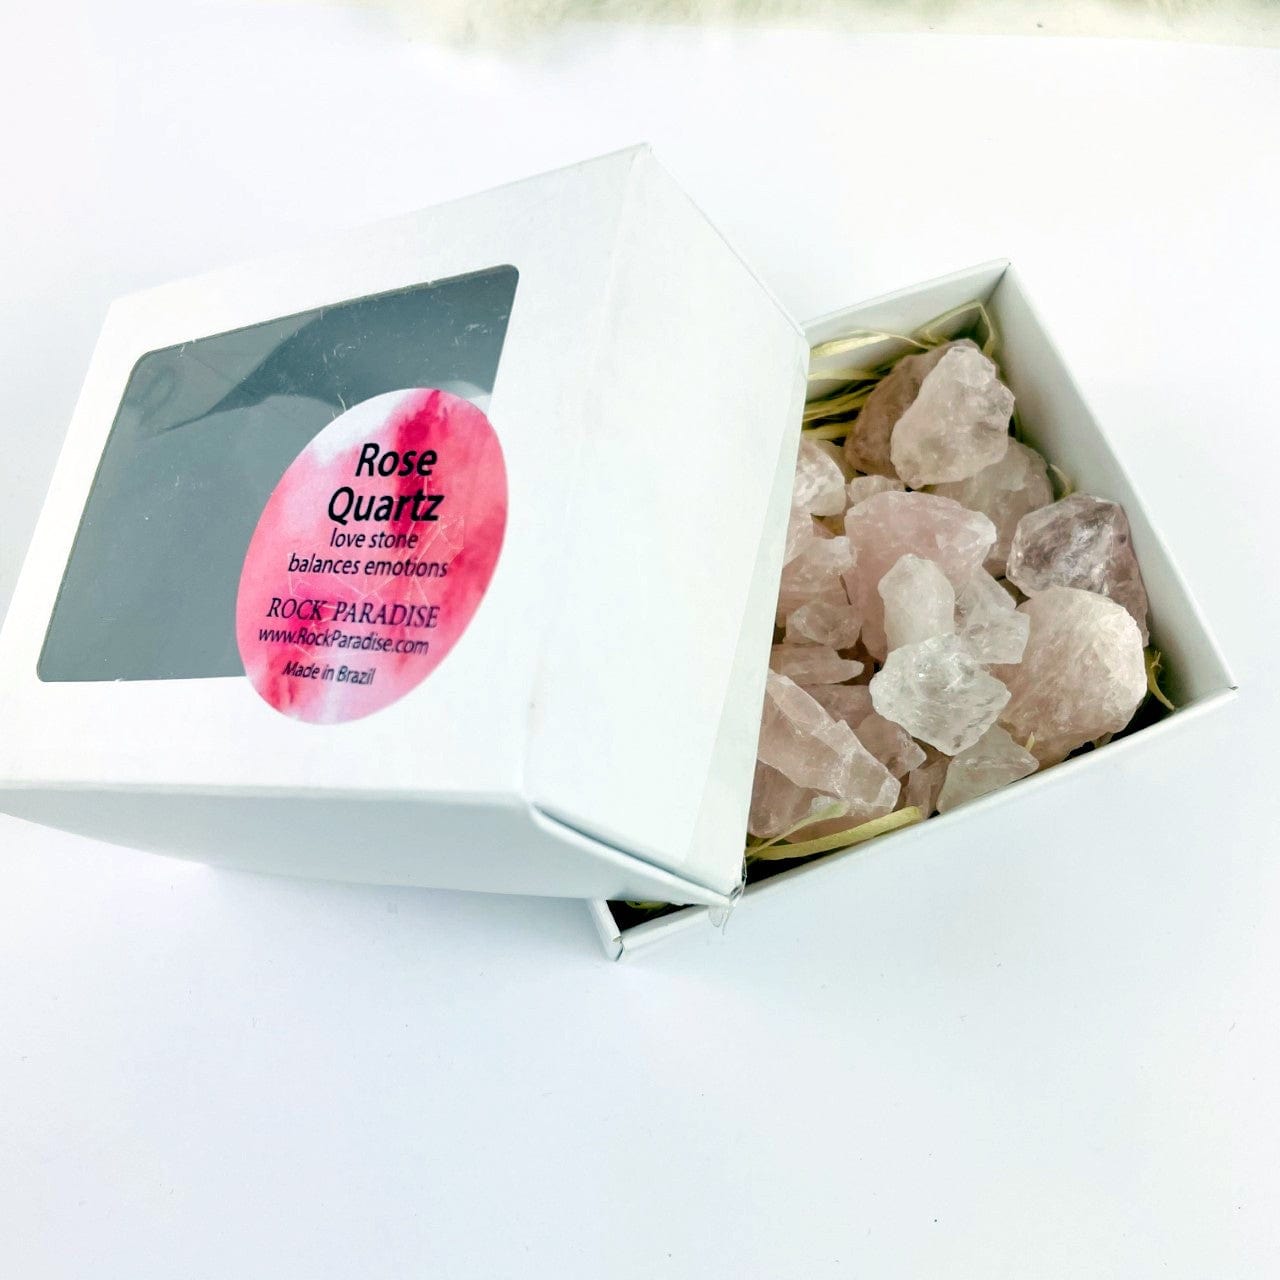 Rose Quartz Chubbie Box of Stones with open box